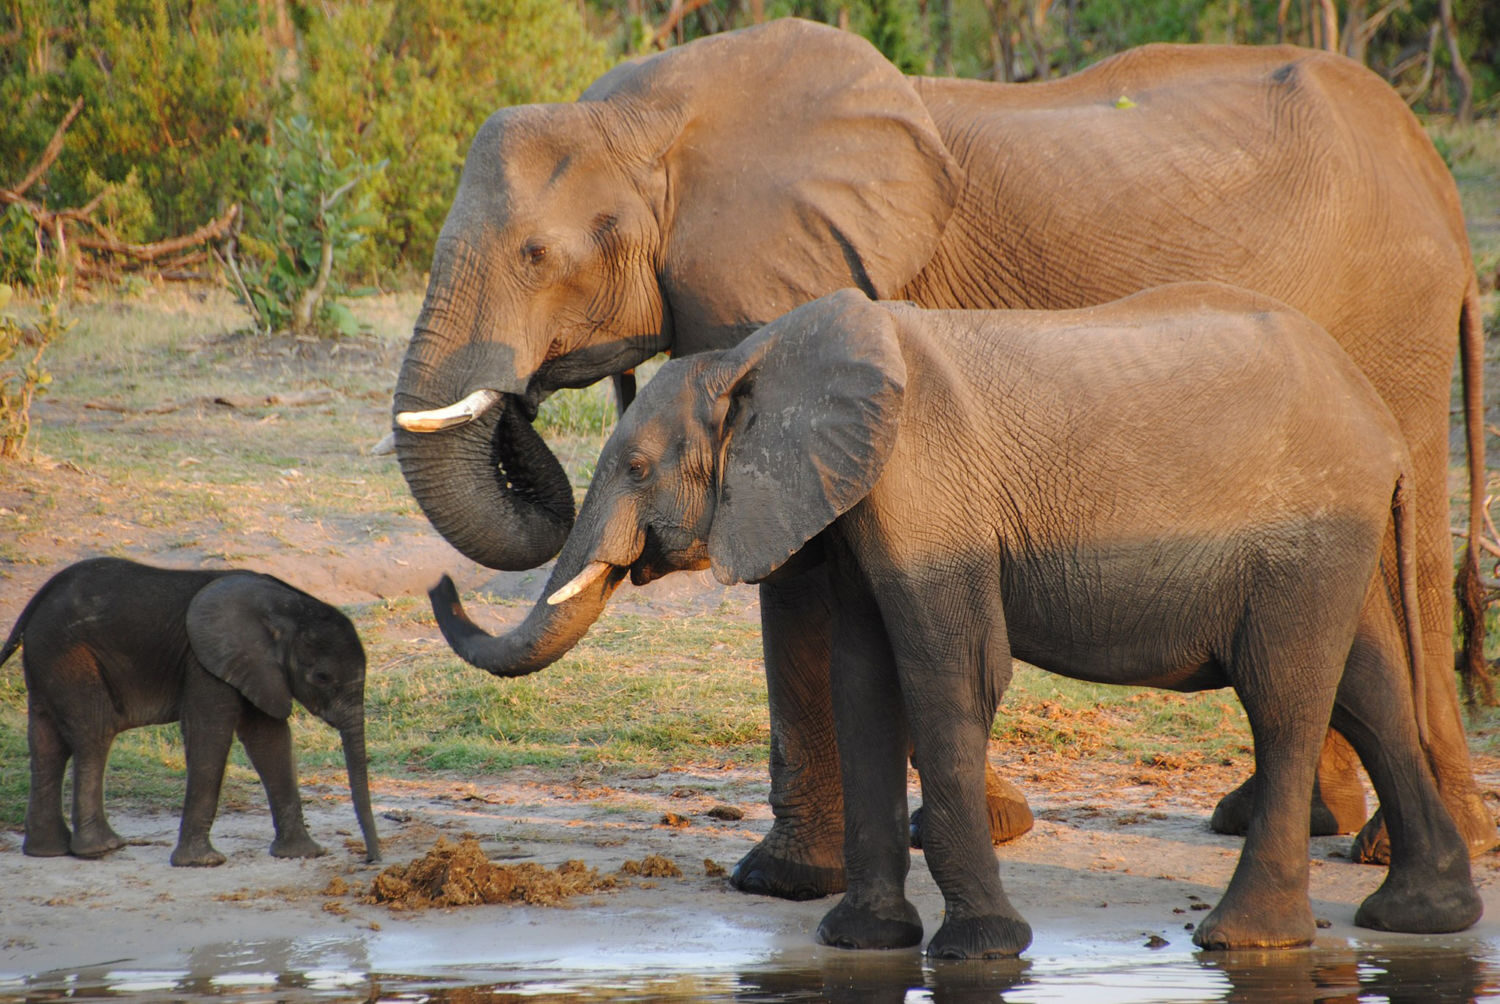 Elephants in the Savuti region of Botswana